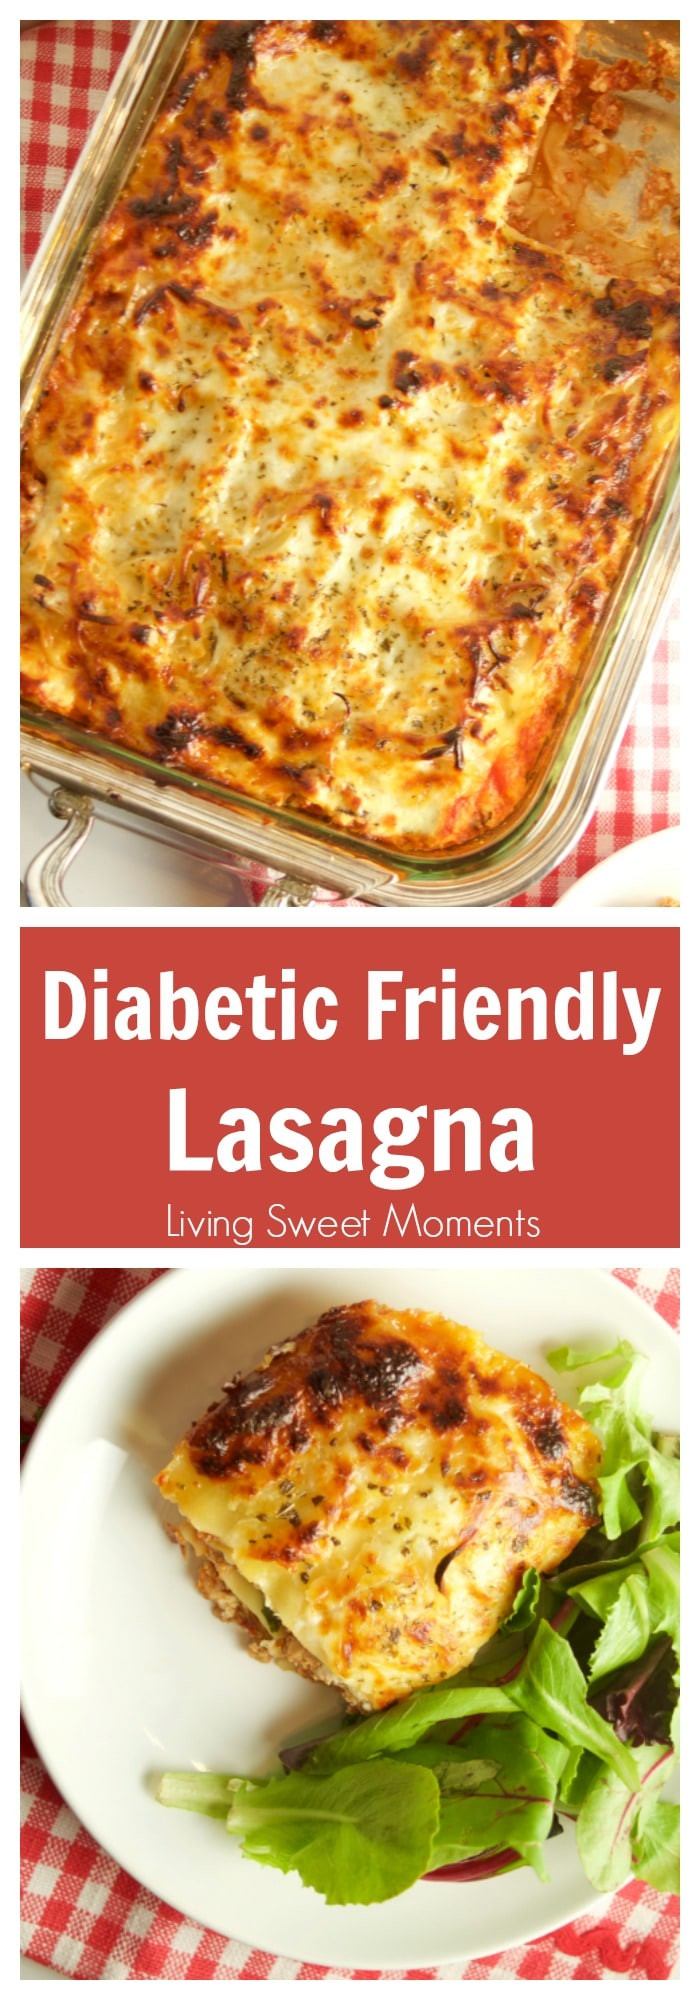 Pinterest Diabetic Recipes
 Diabetic Lasagna Recipe Living Sweet Moments